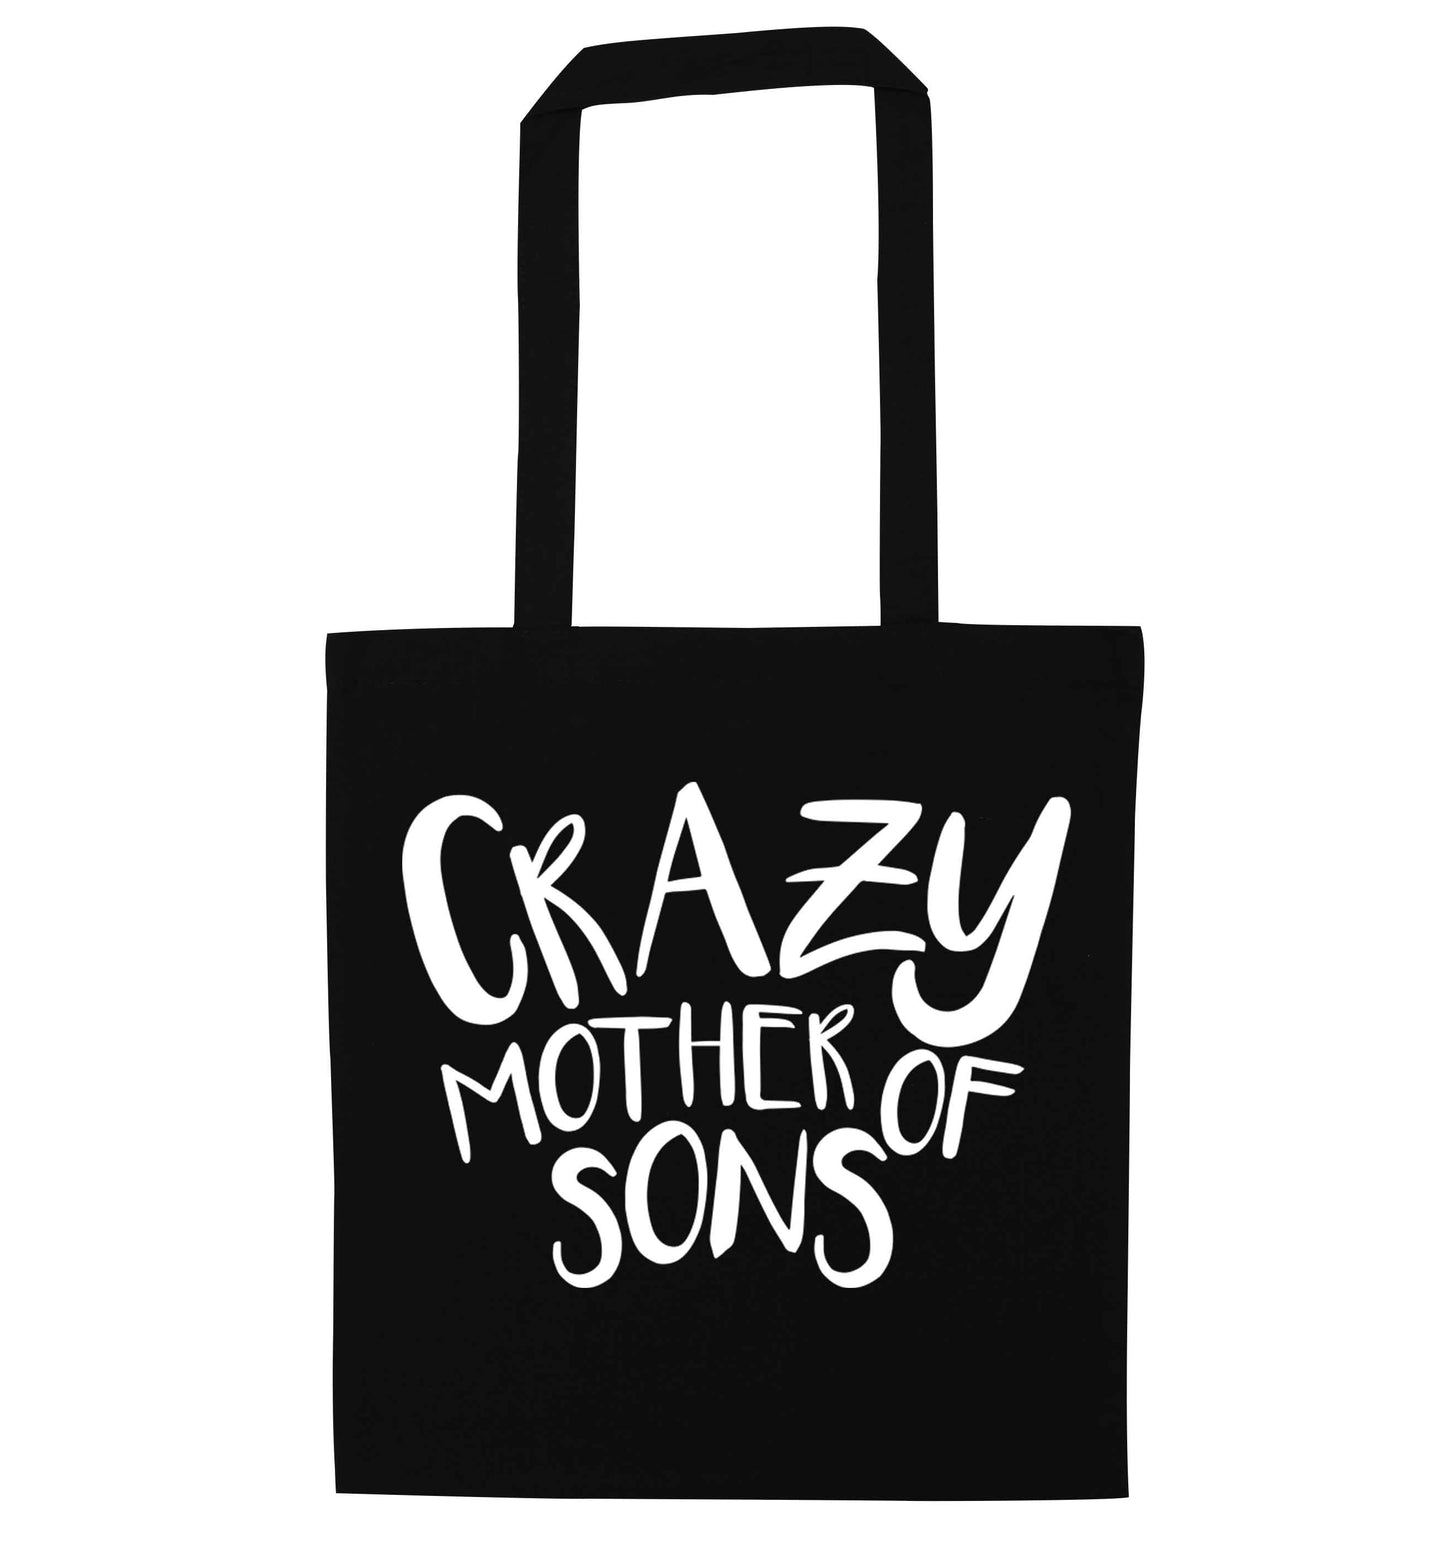 Crazy mother of sons black tote bag